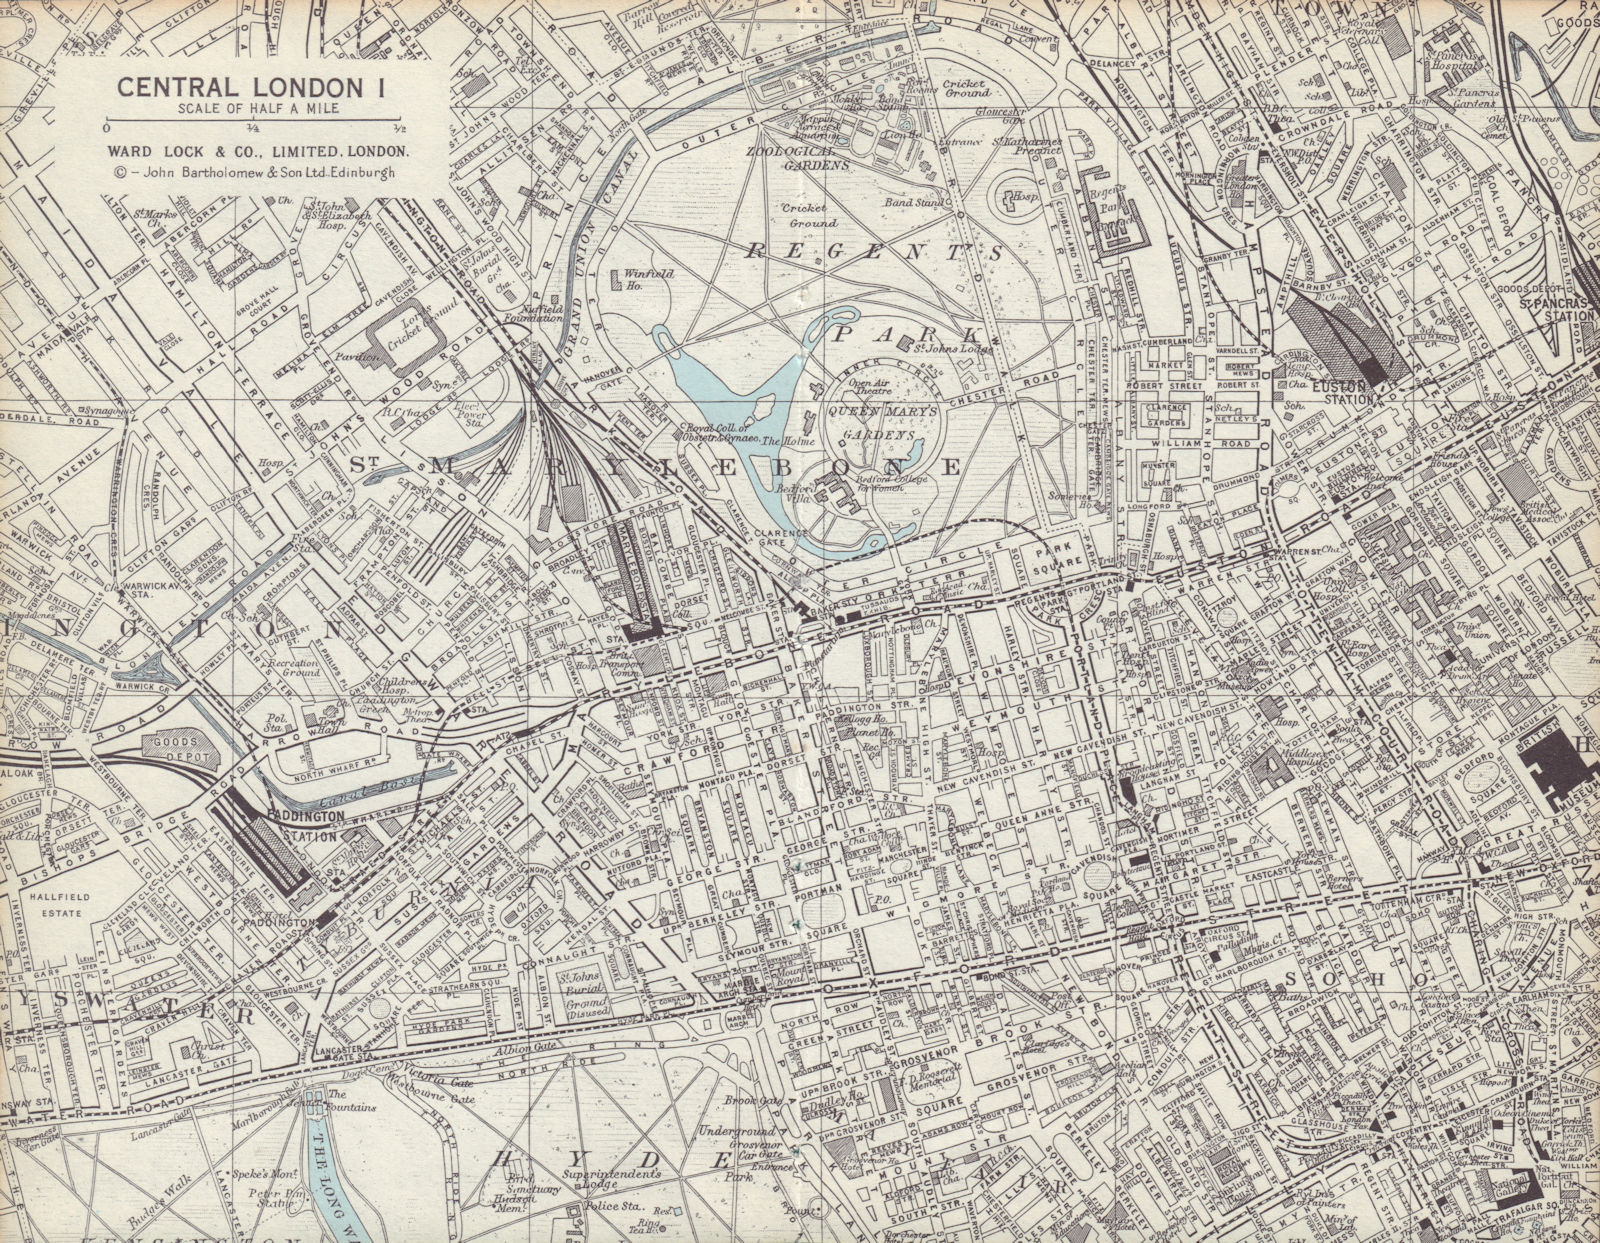 Central London 1. Marylebone Mayfair St James's Bayswater. WARD LOCK 1970 map